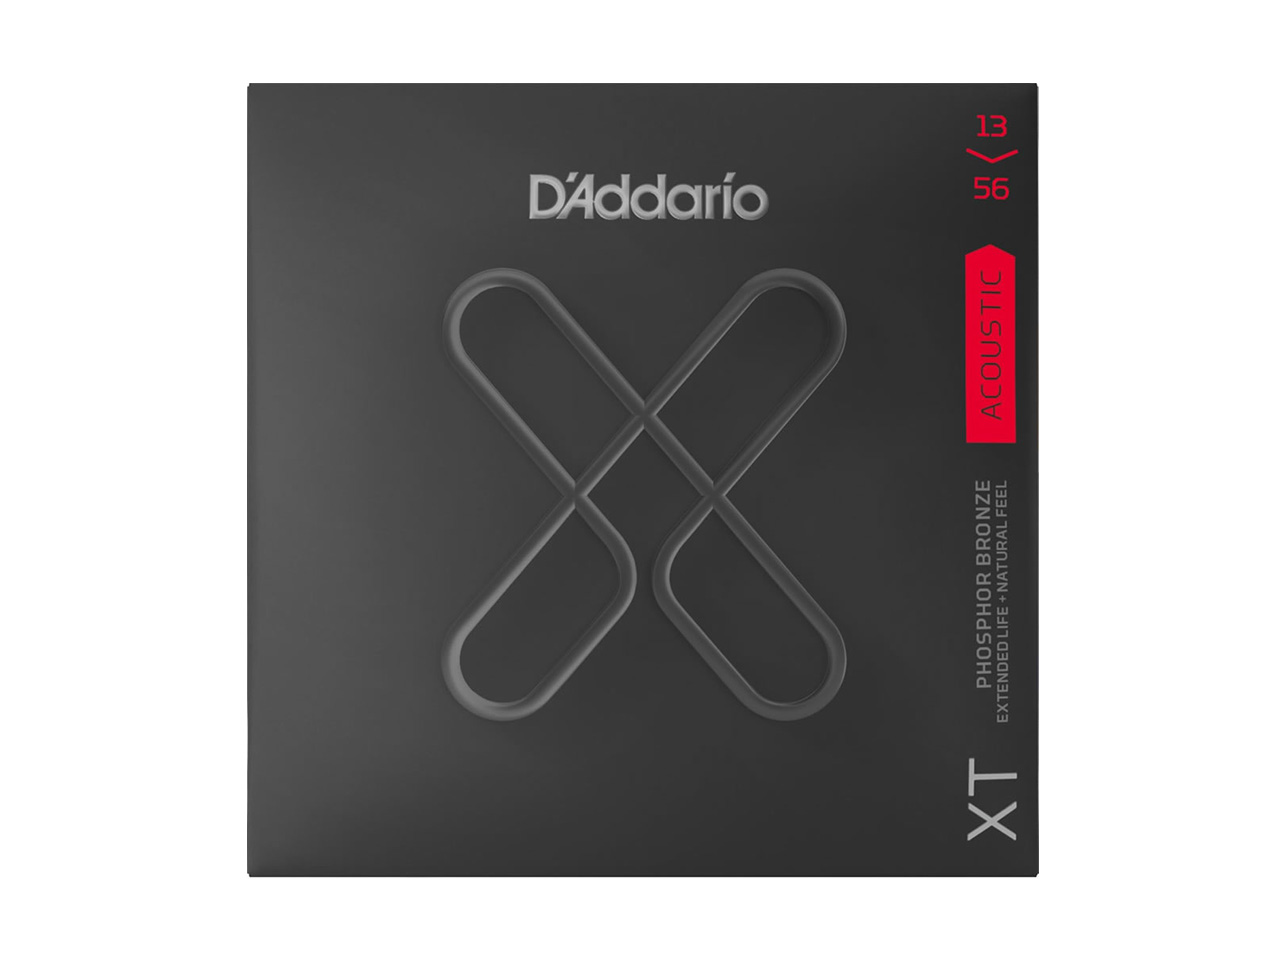 D'Addario(ダダリオ) XT ACOUSTIC PHOSPHOR BRONZE, EXTRA LIGHT / XTAPB1356 (アコースティックギター弦)